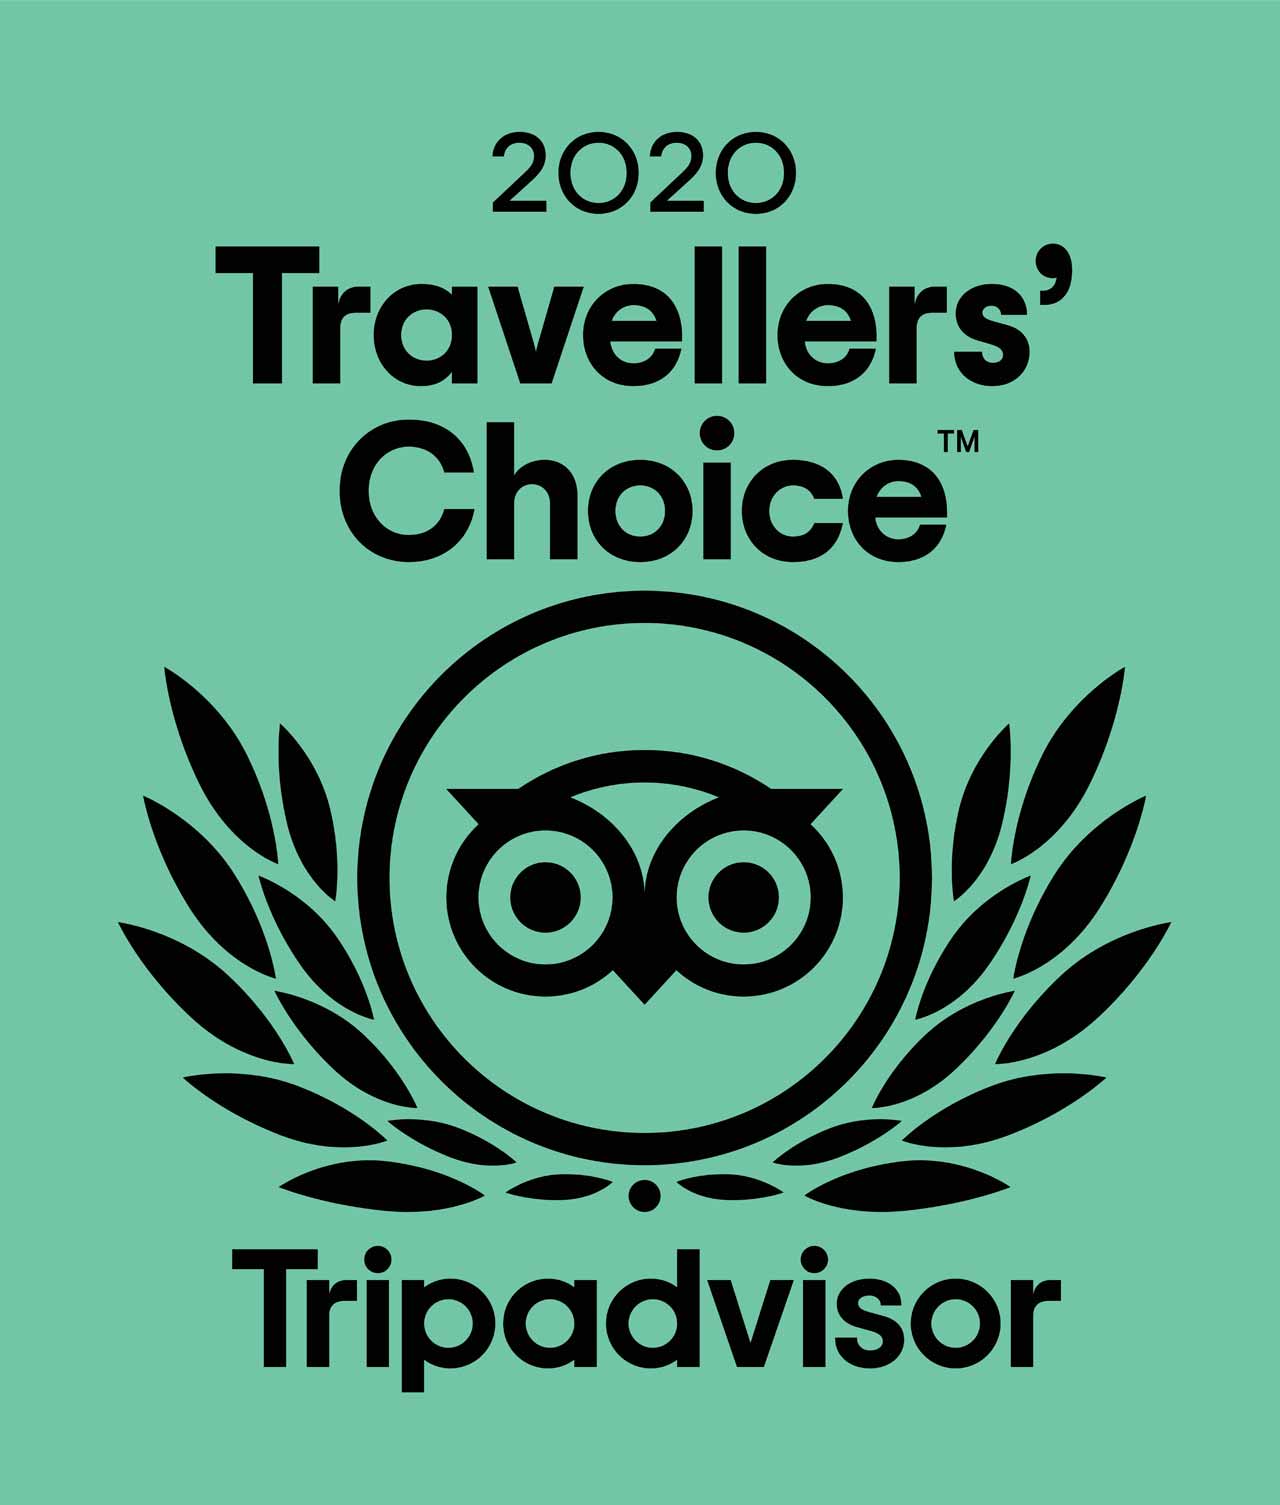 Tripadvisor travellers choice award